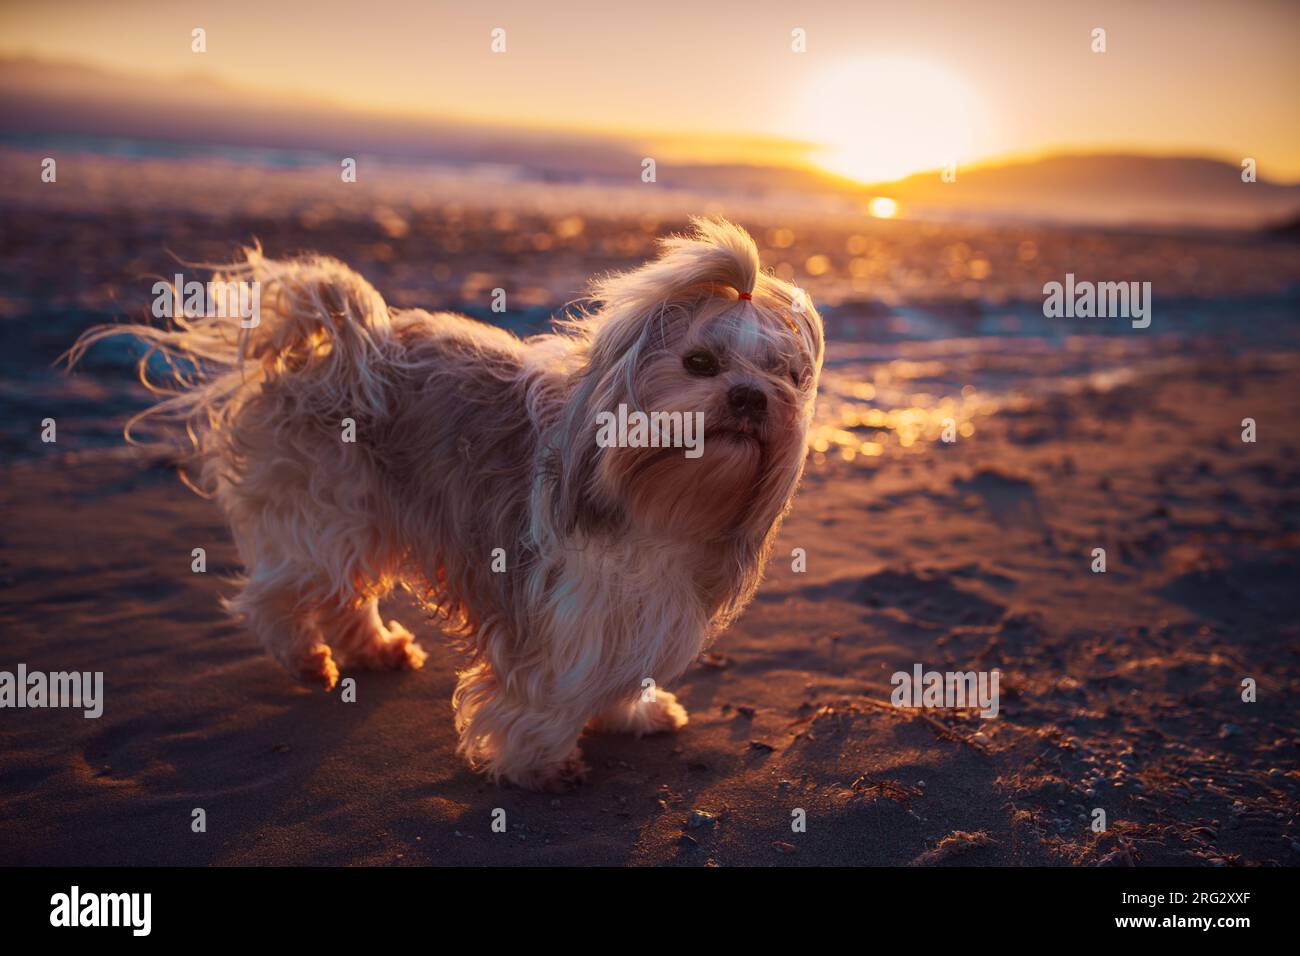 Shih tzu dog standing at the edge of lake at sunset Stock Photo